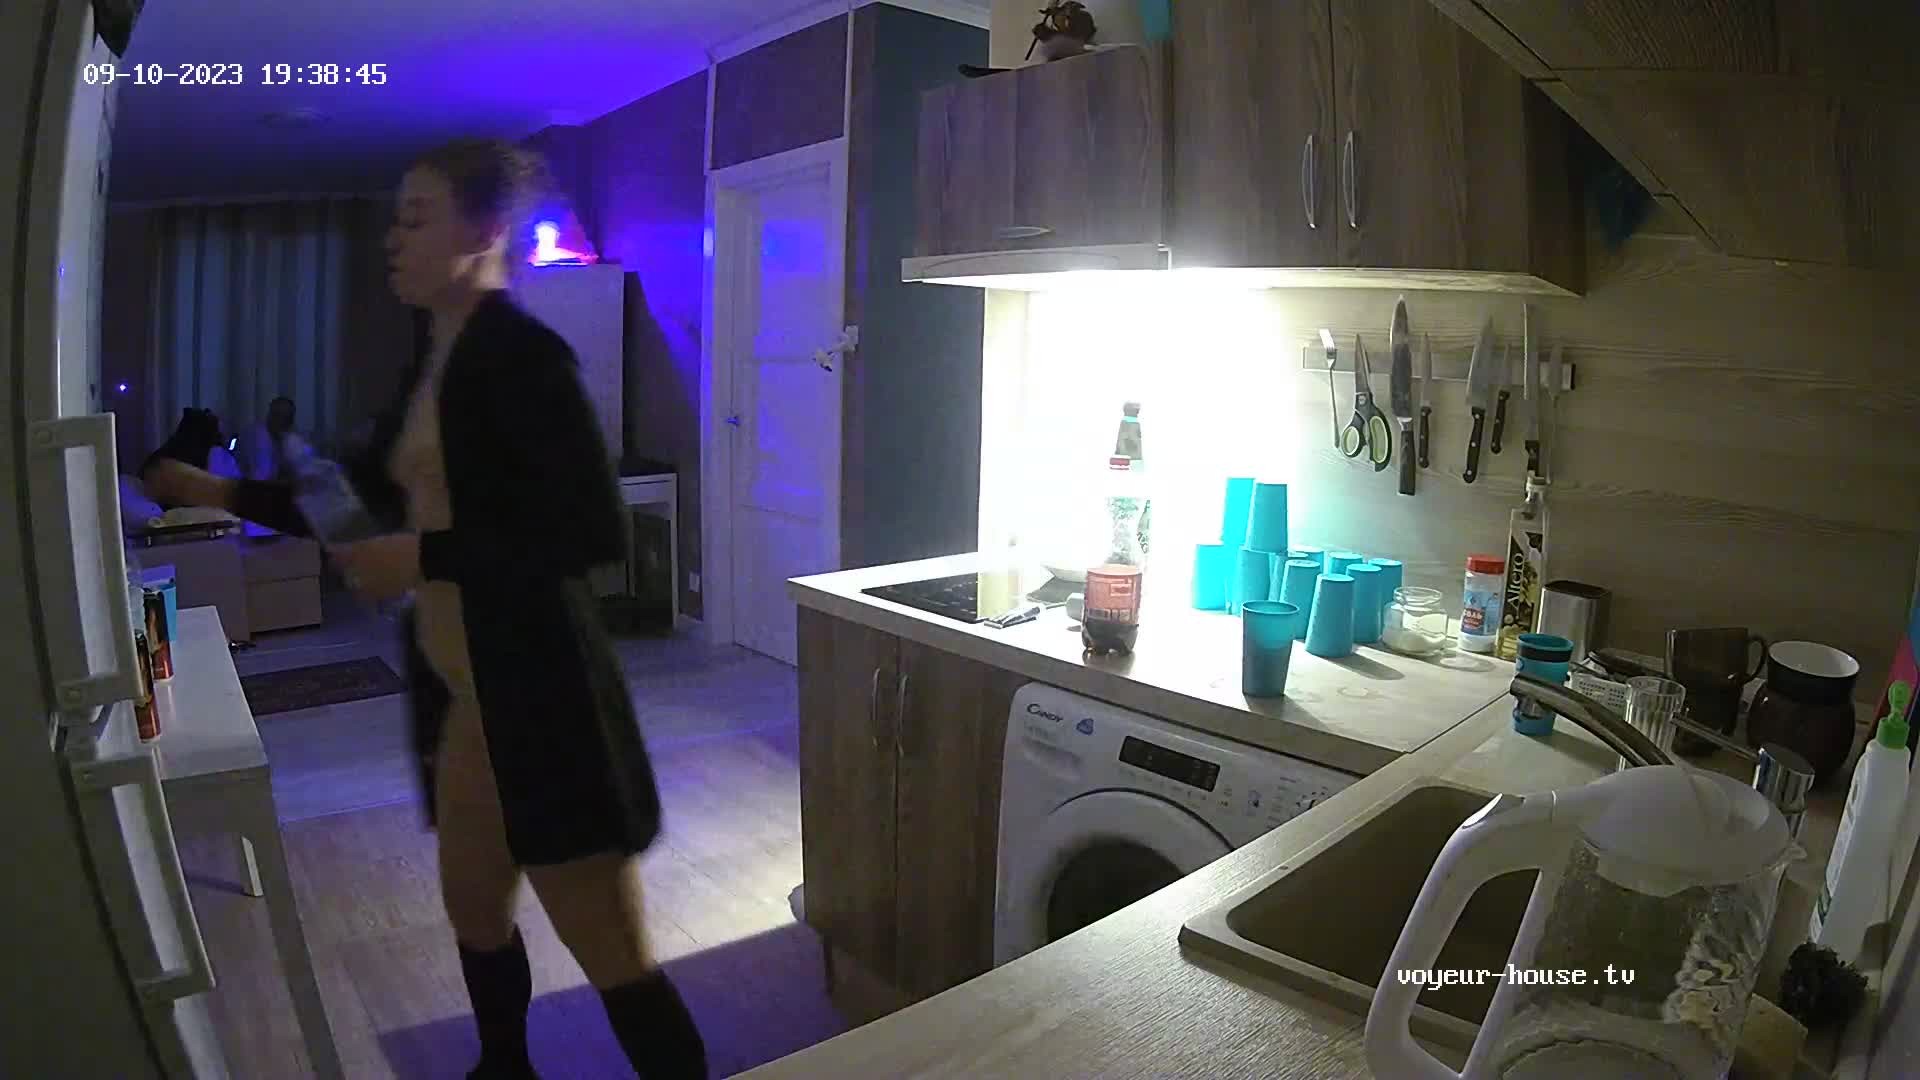 Rheita naked in kitchen, Sep10/23